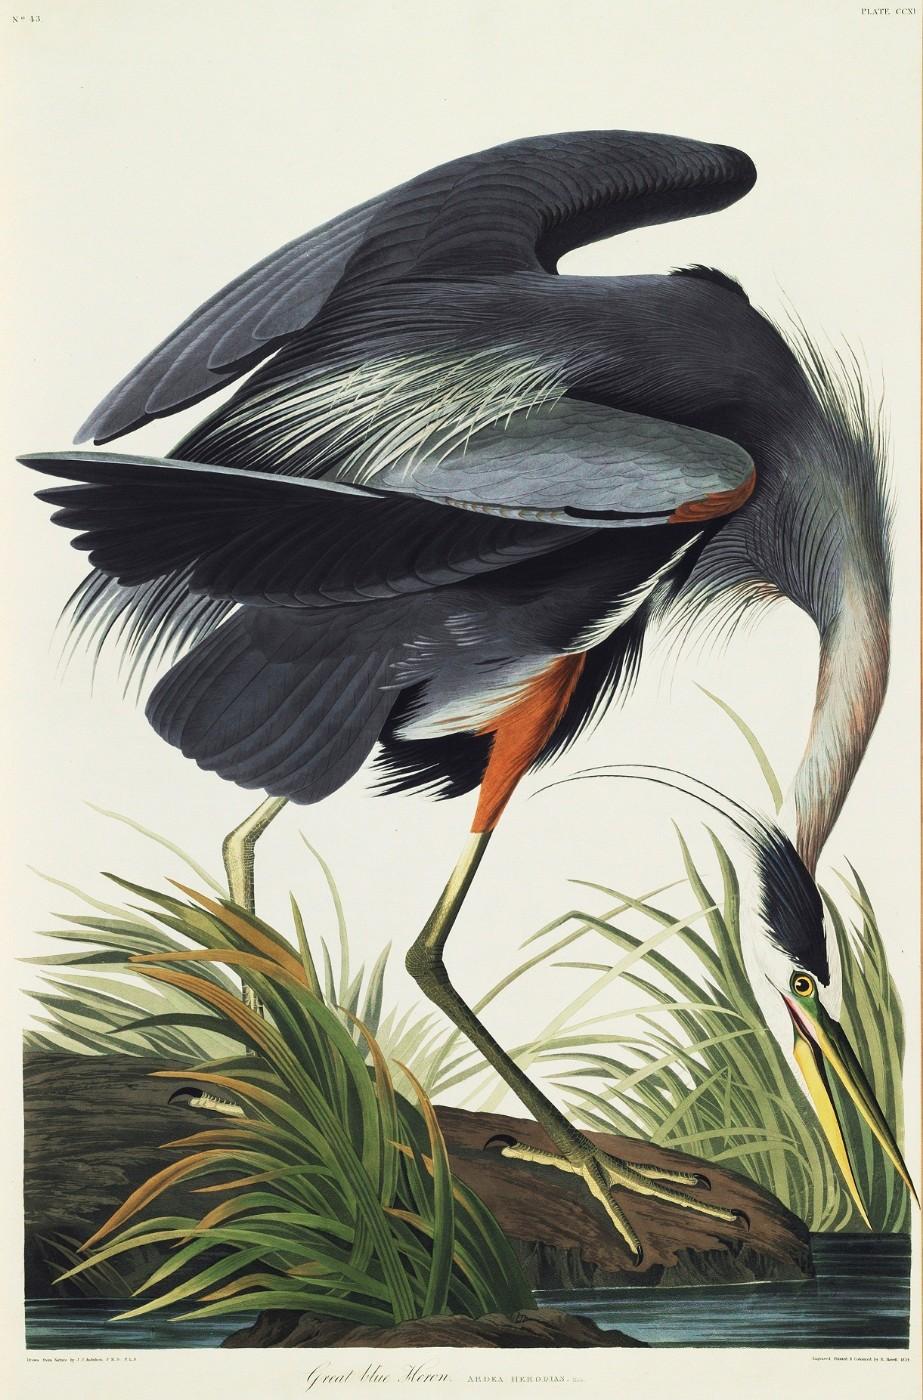 The Great Blue Heron, from John James Audubon's "The Birds of America"